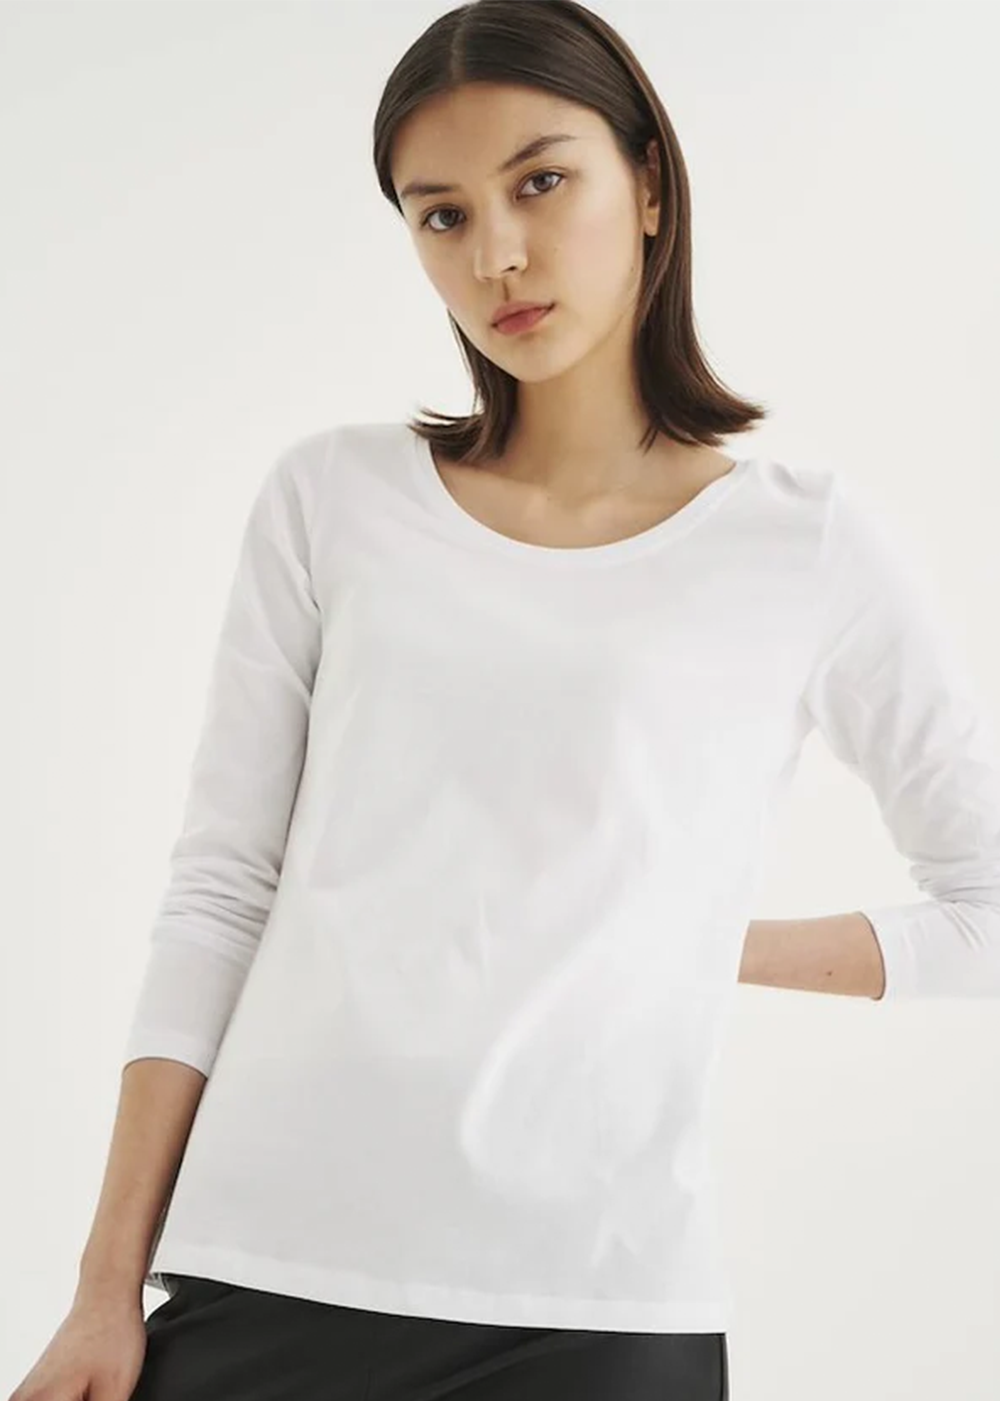 Rena Long Sleeve T-Shirt - White - InWear - Danali - Canada